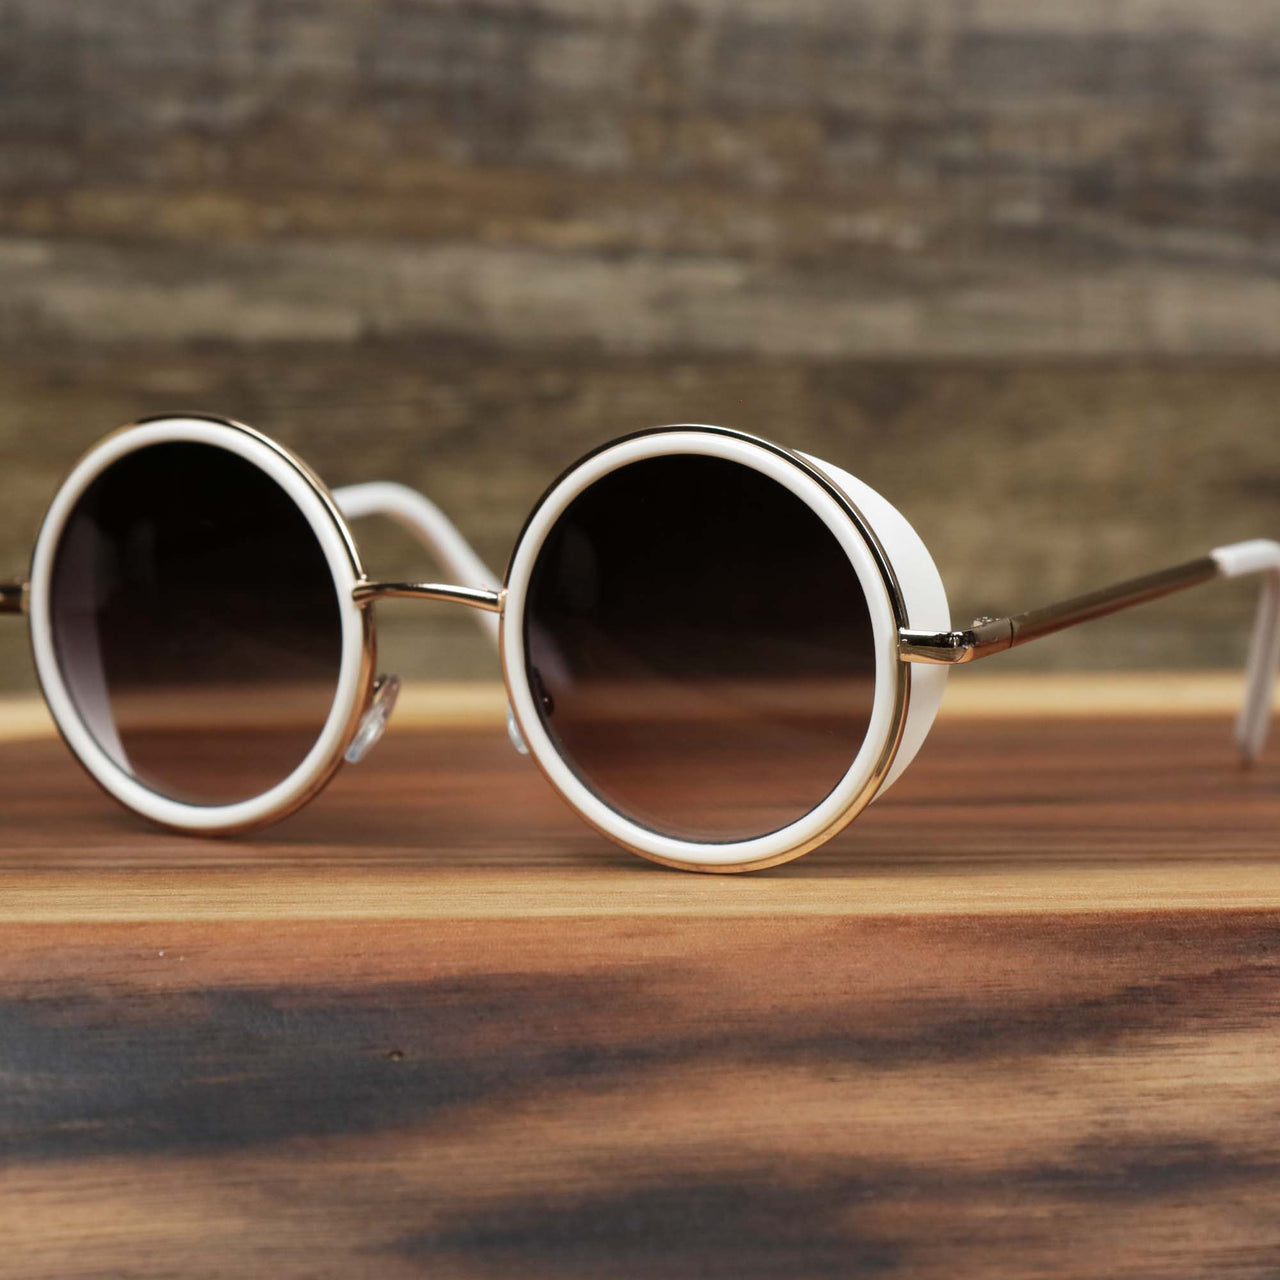 The Circle Frame Black Lens Sunglasses with White Frame